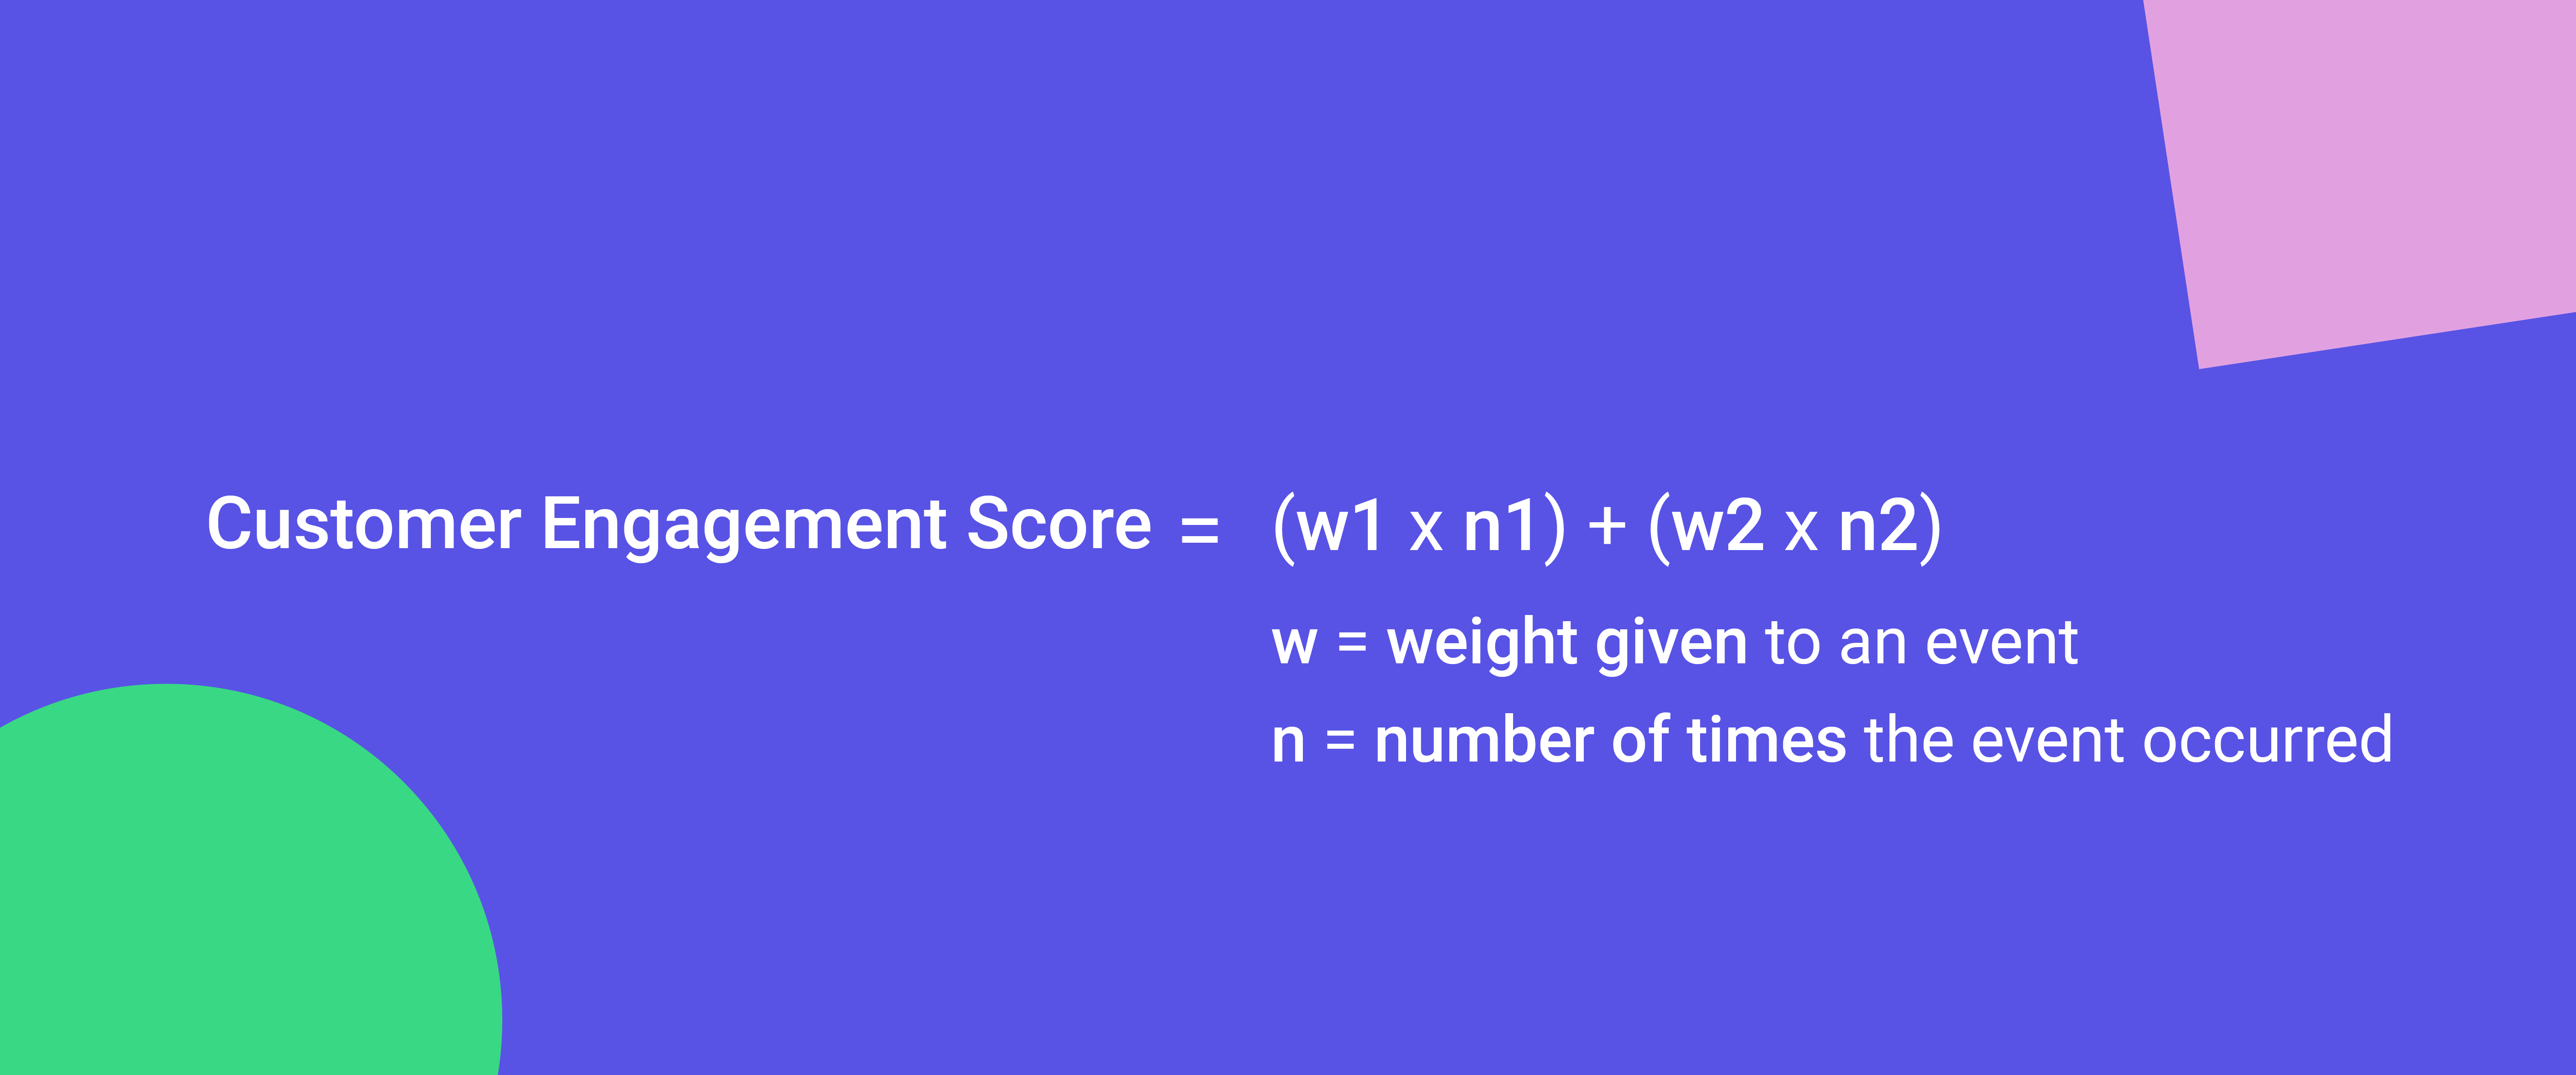 customer engagement score calculation